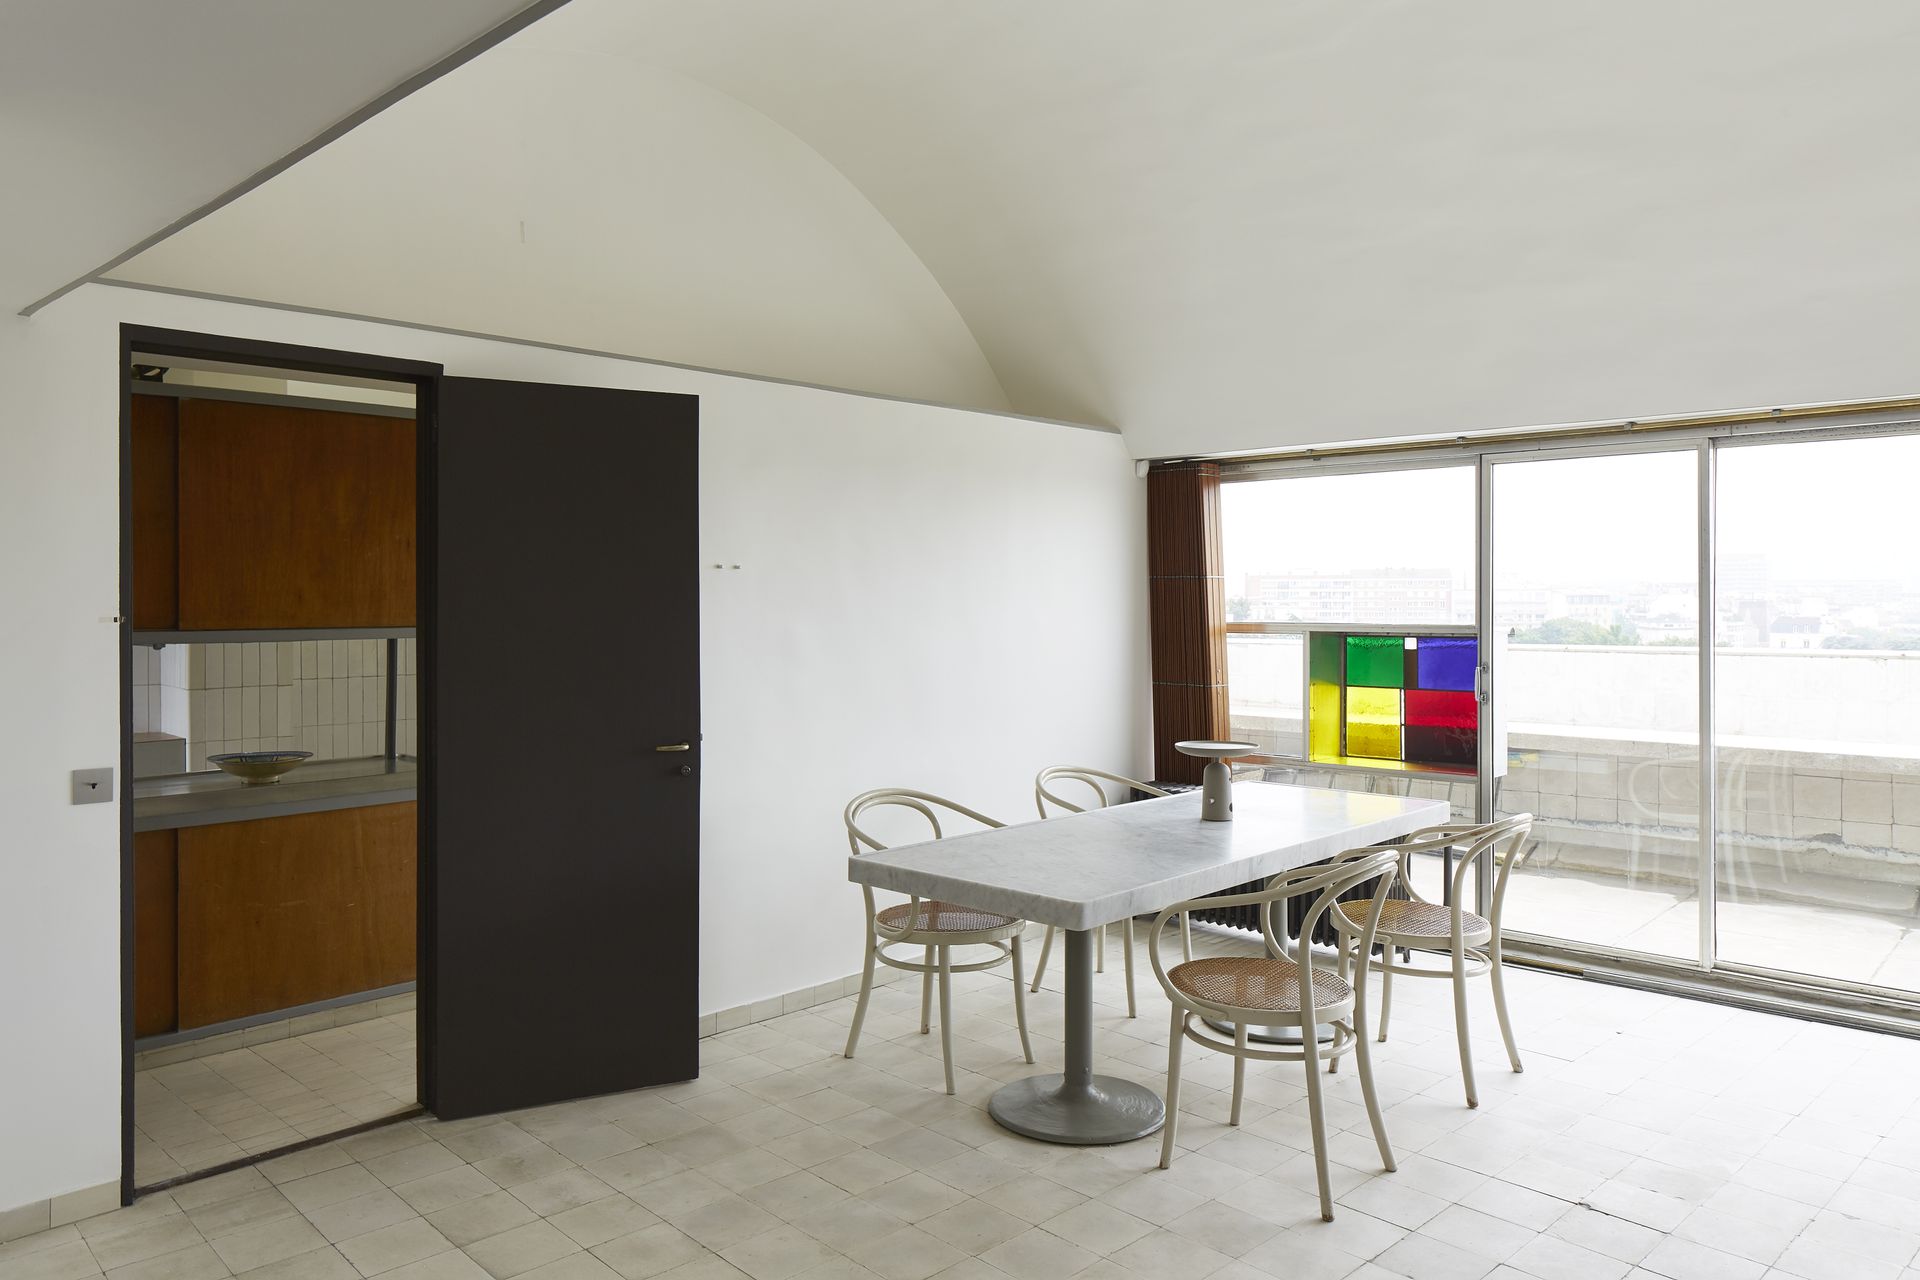 Le Corbusier’s Paris apartment and studio opens to public | Wallpaper